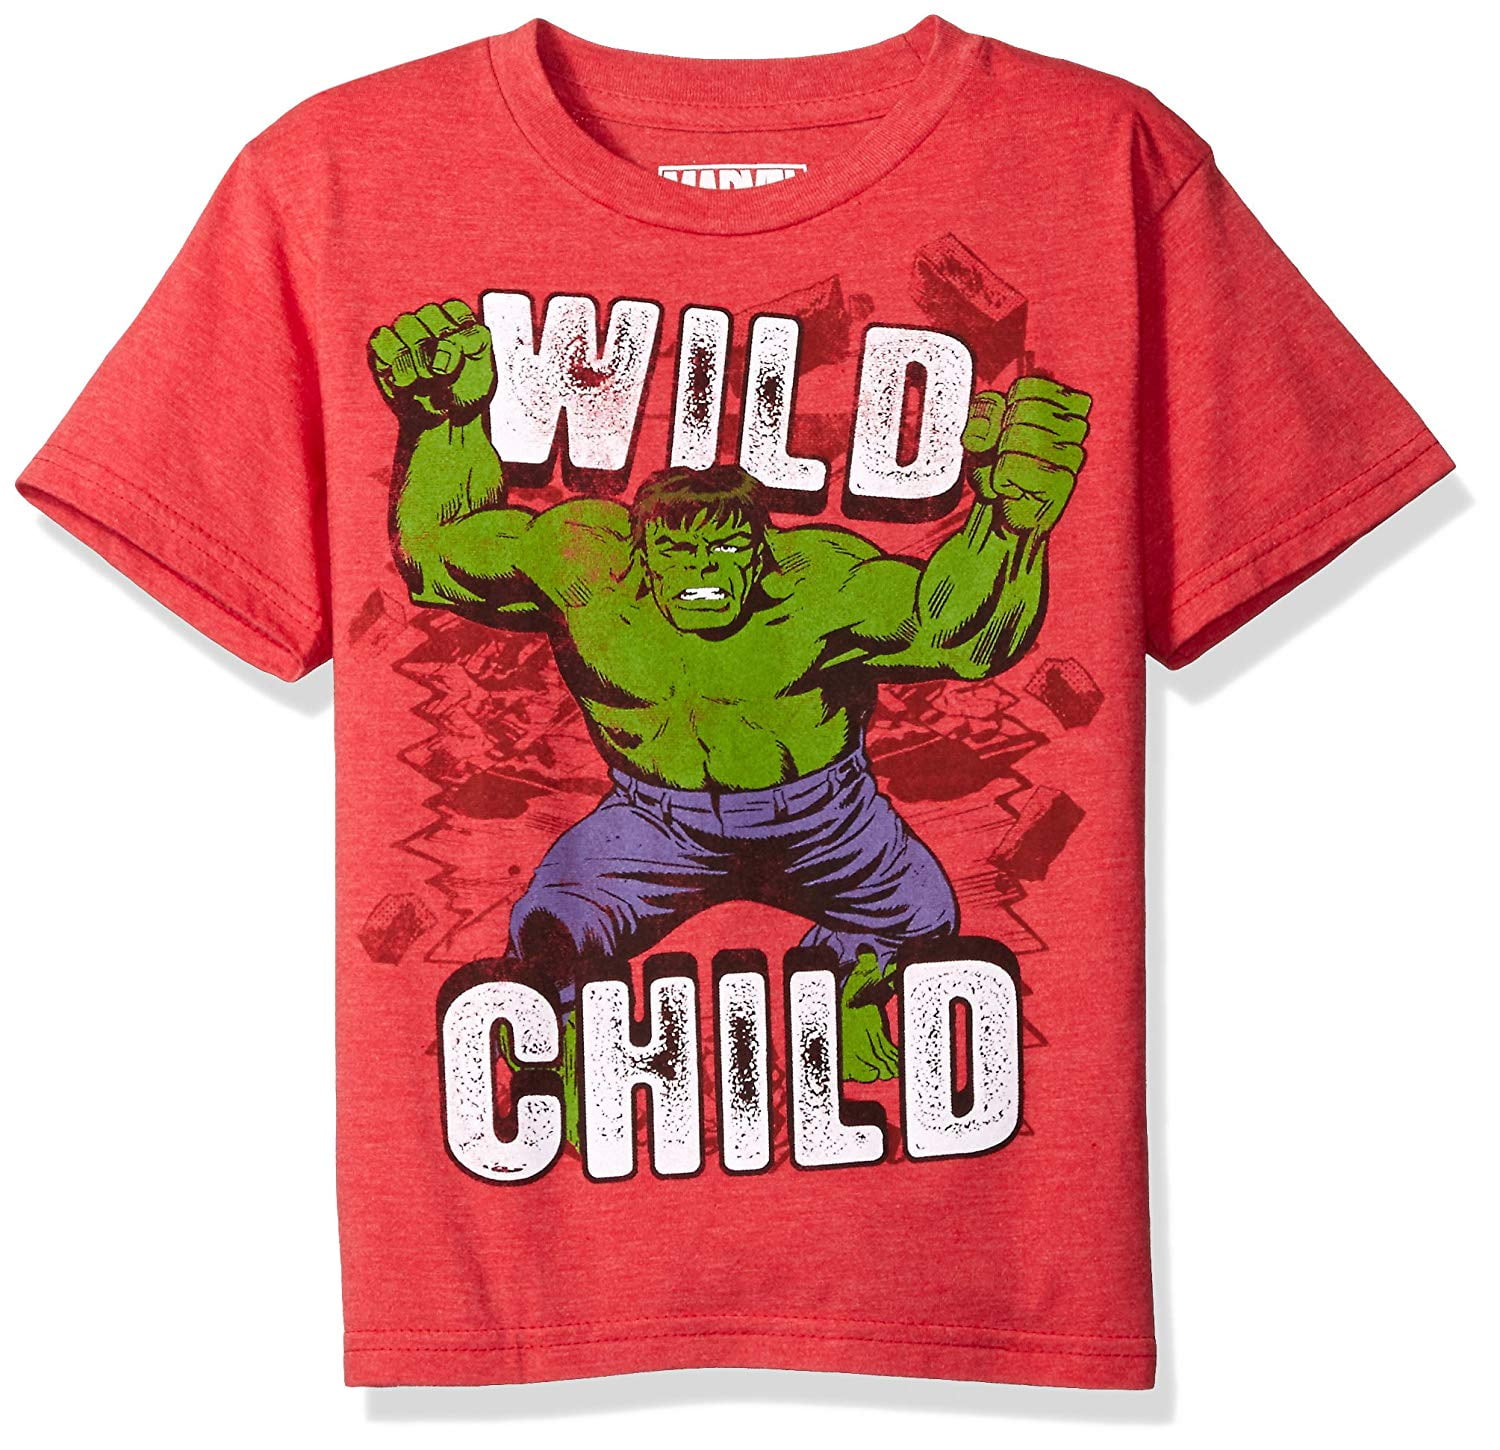 Official Disney Marvel Floride Incroyable Hulk percée Youth T-Shirt 